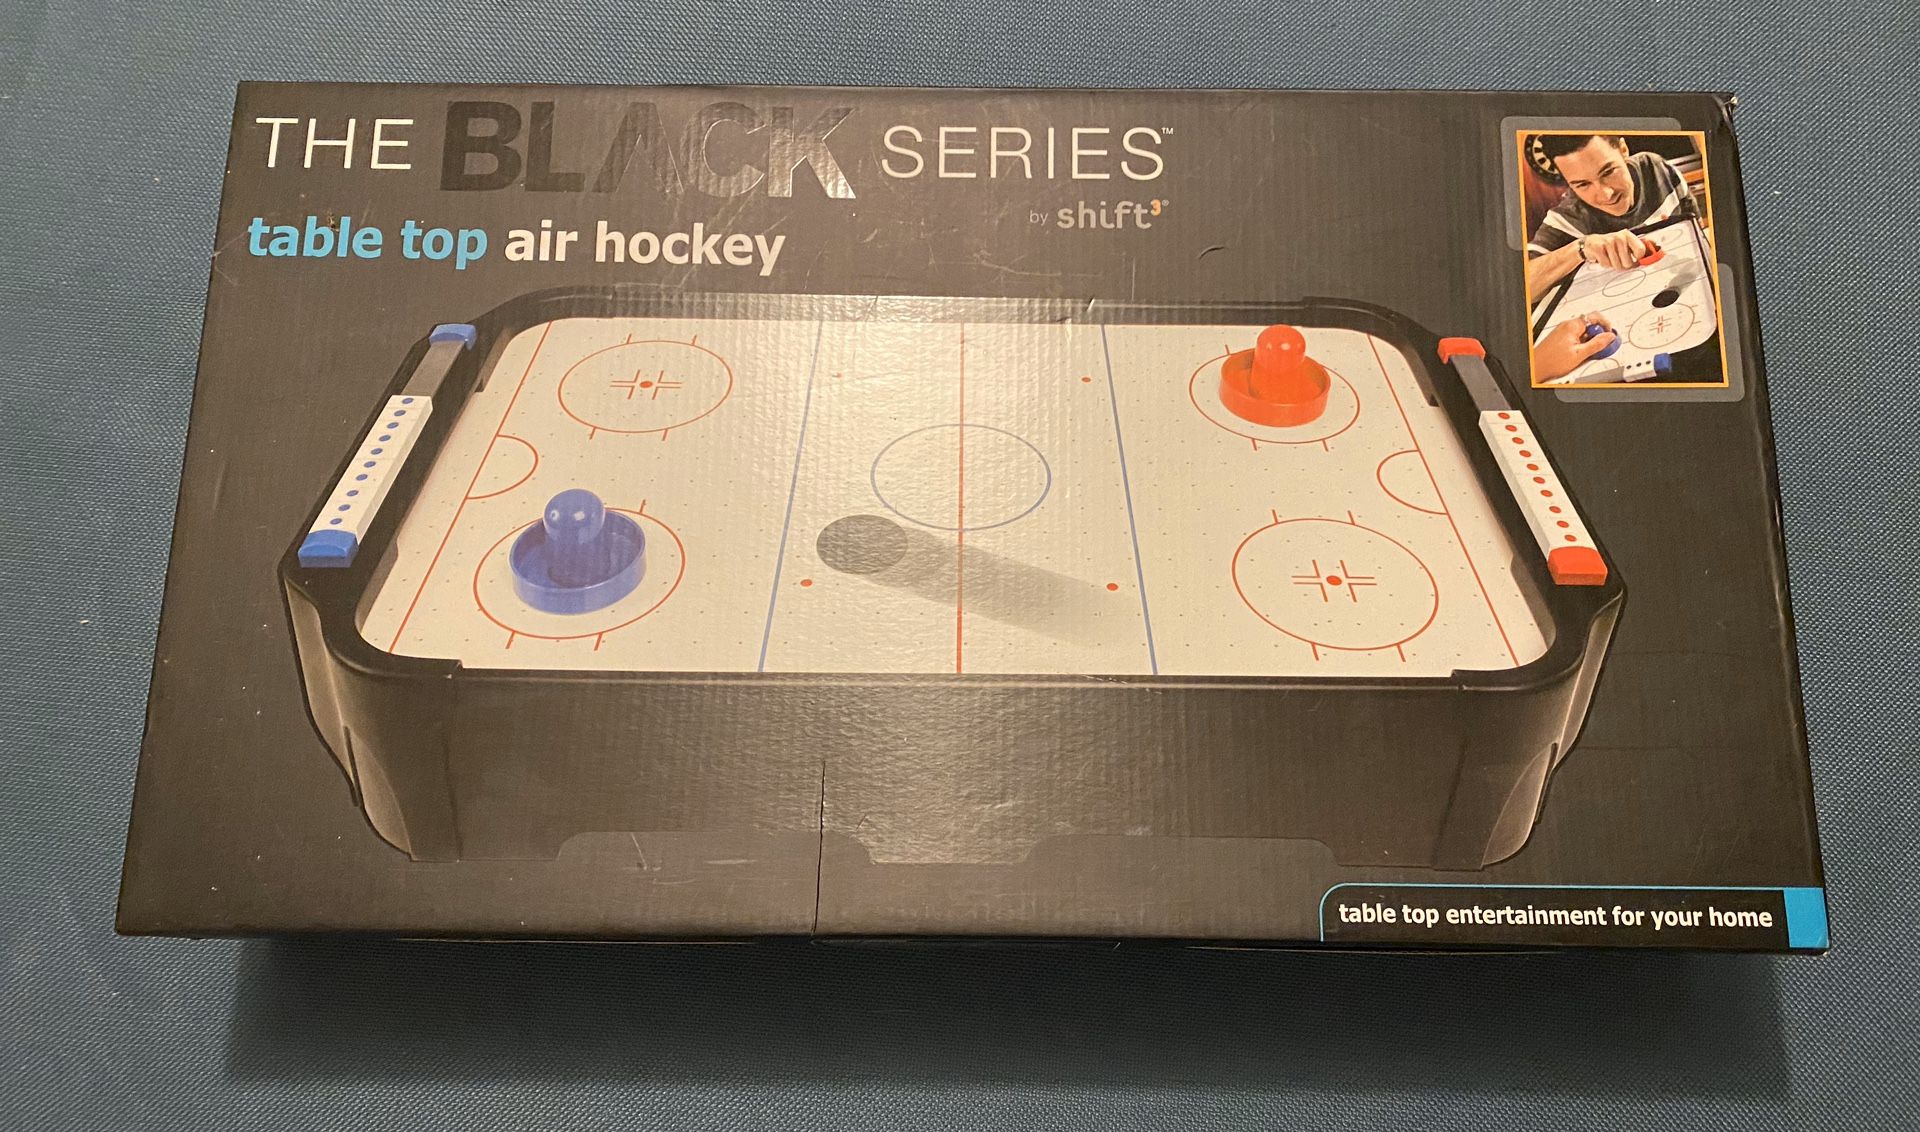 Miniature air hockey table toy